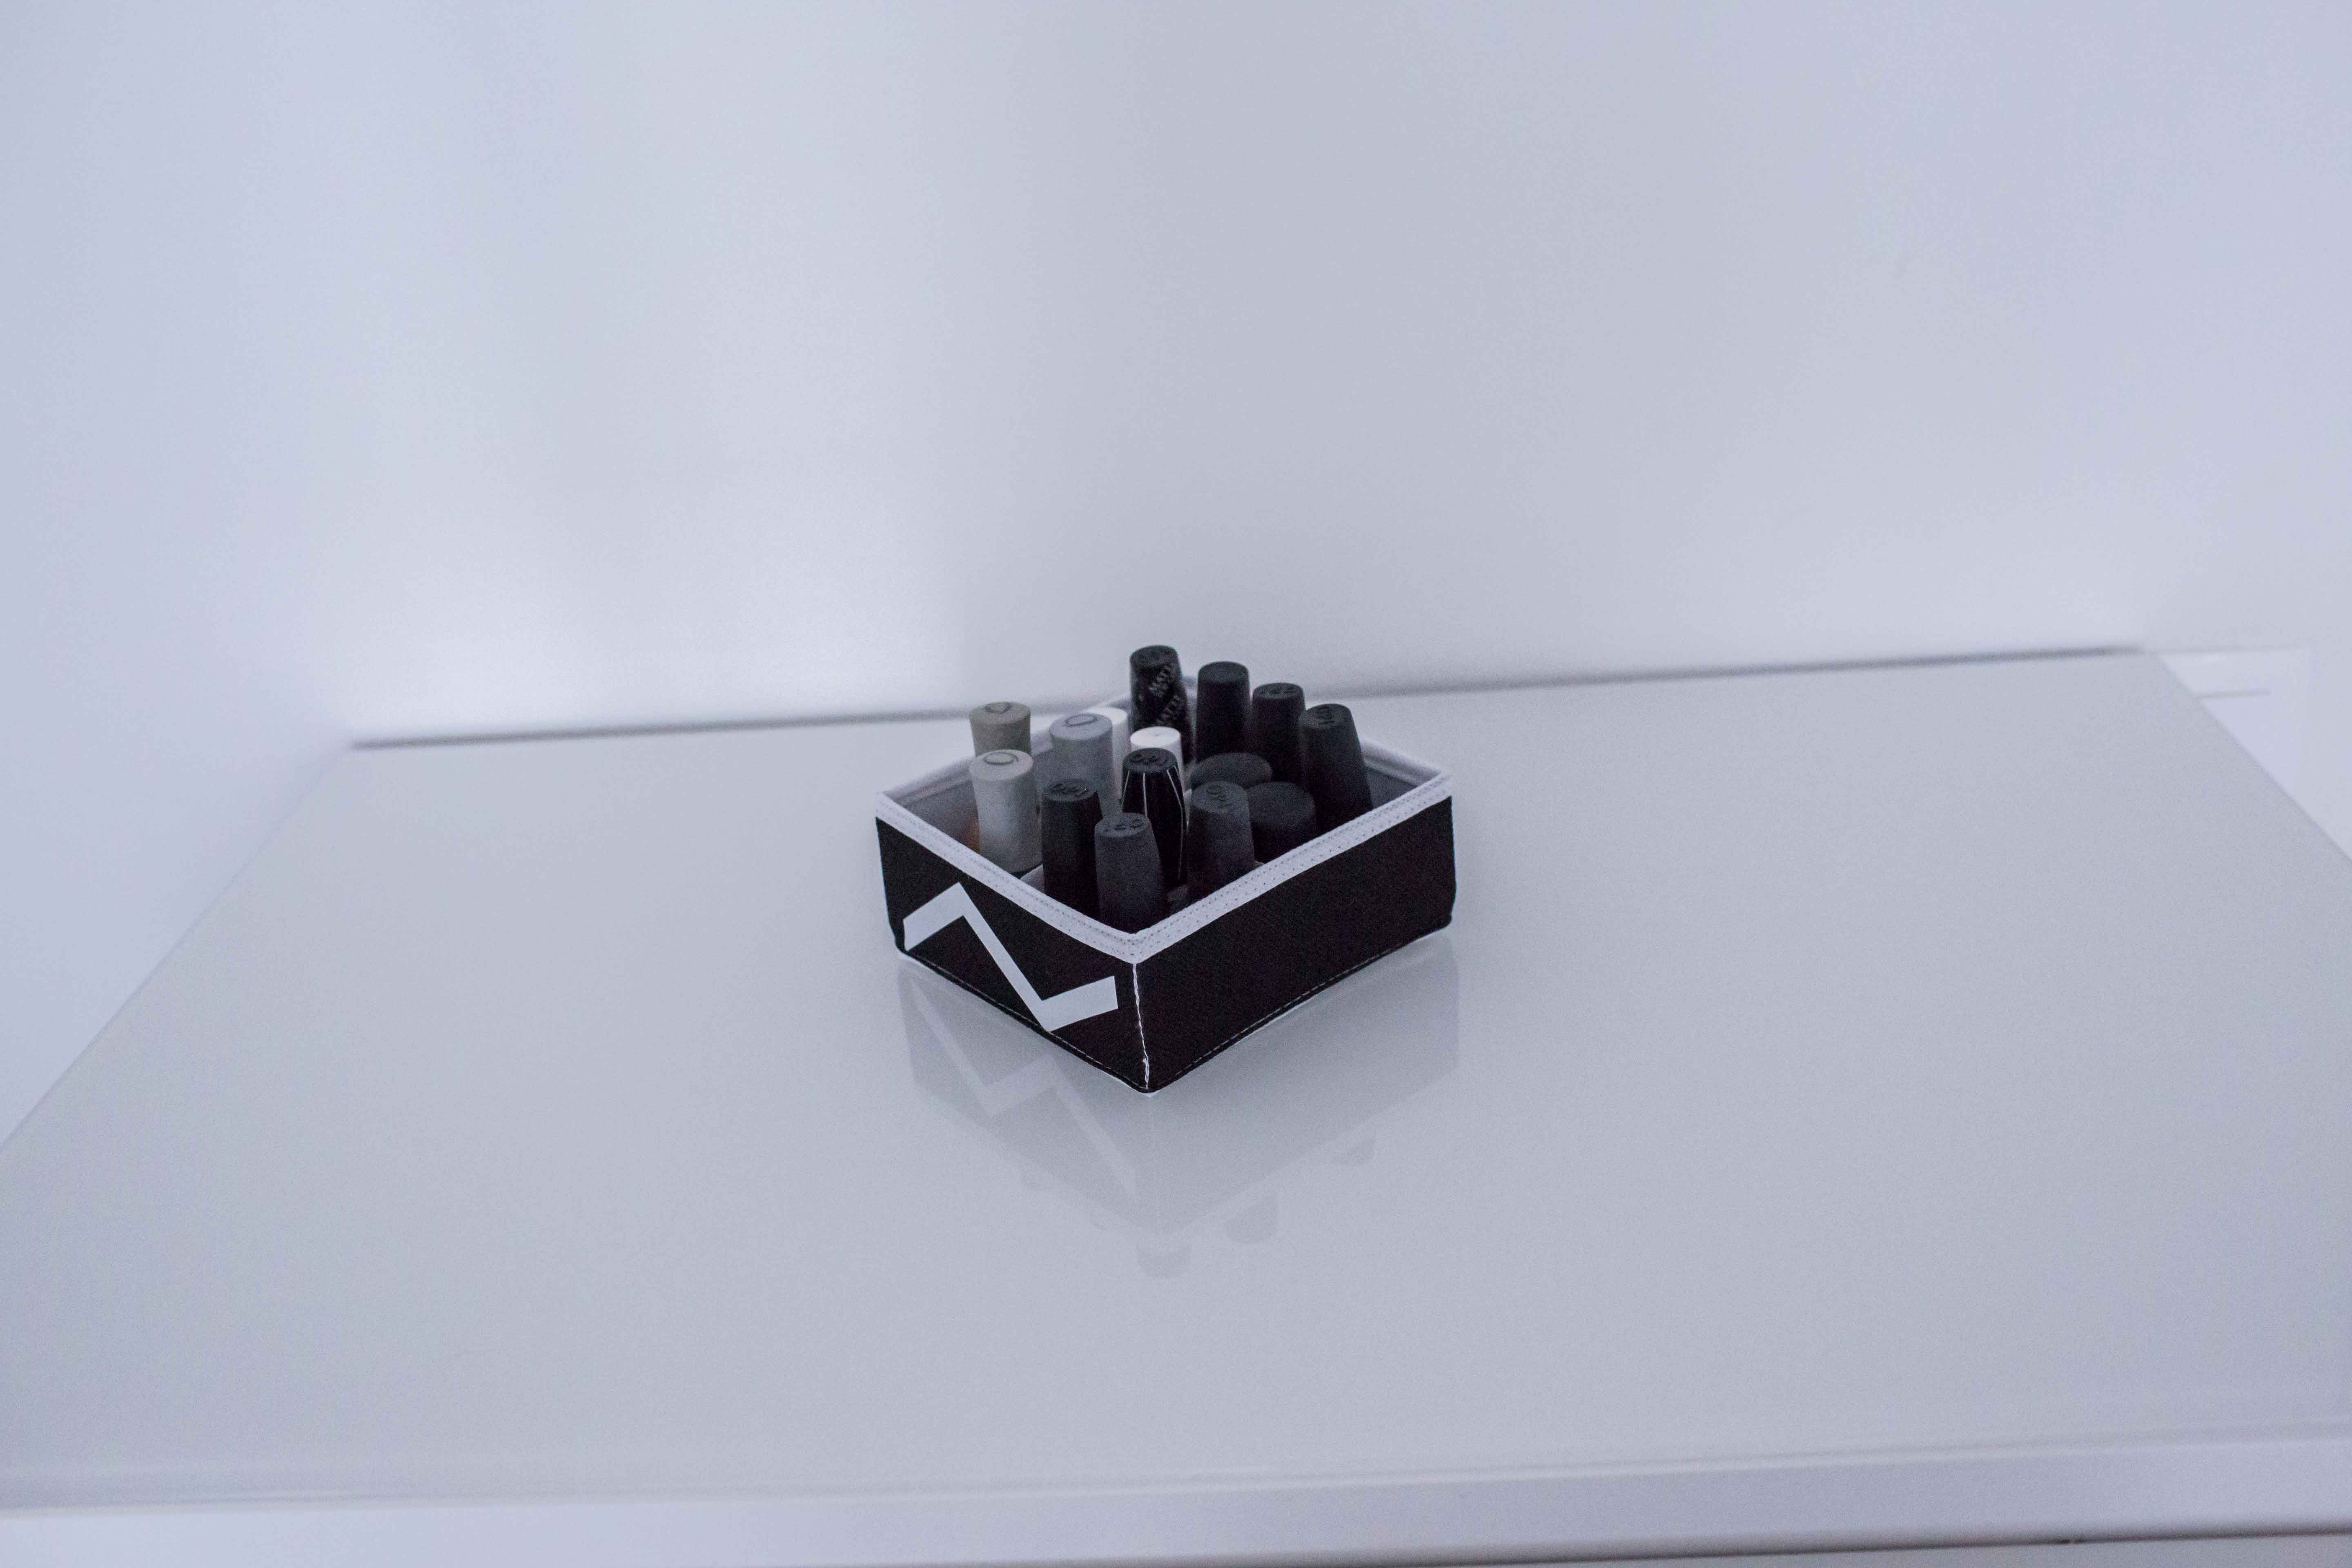 Органайзер для мелочей "Zigzag" - коробки для хранения